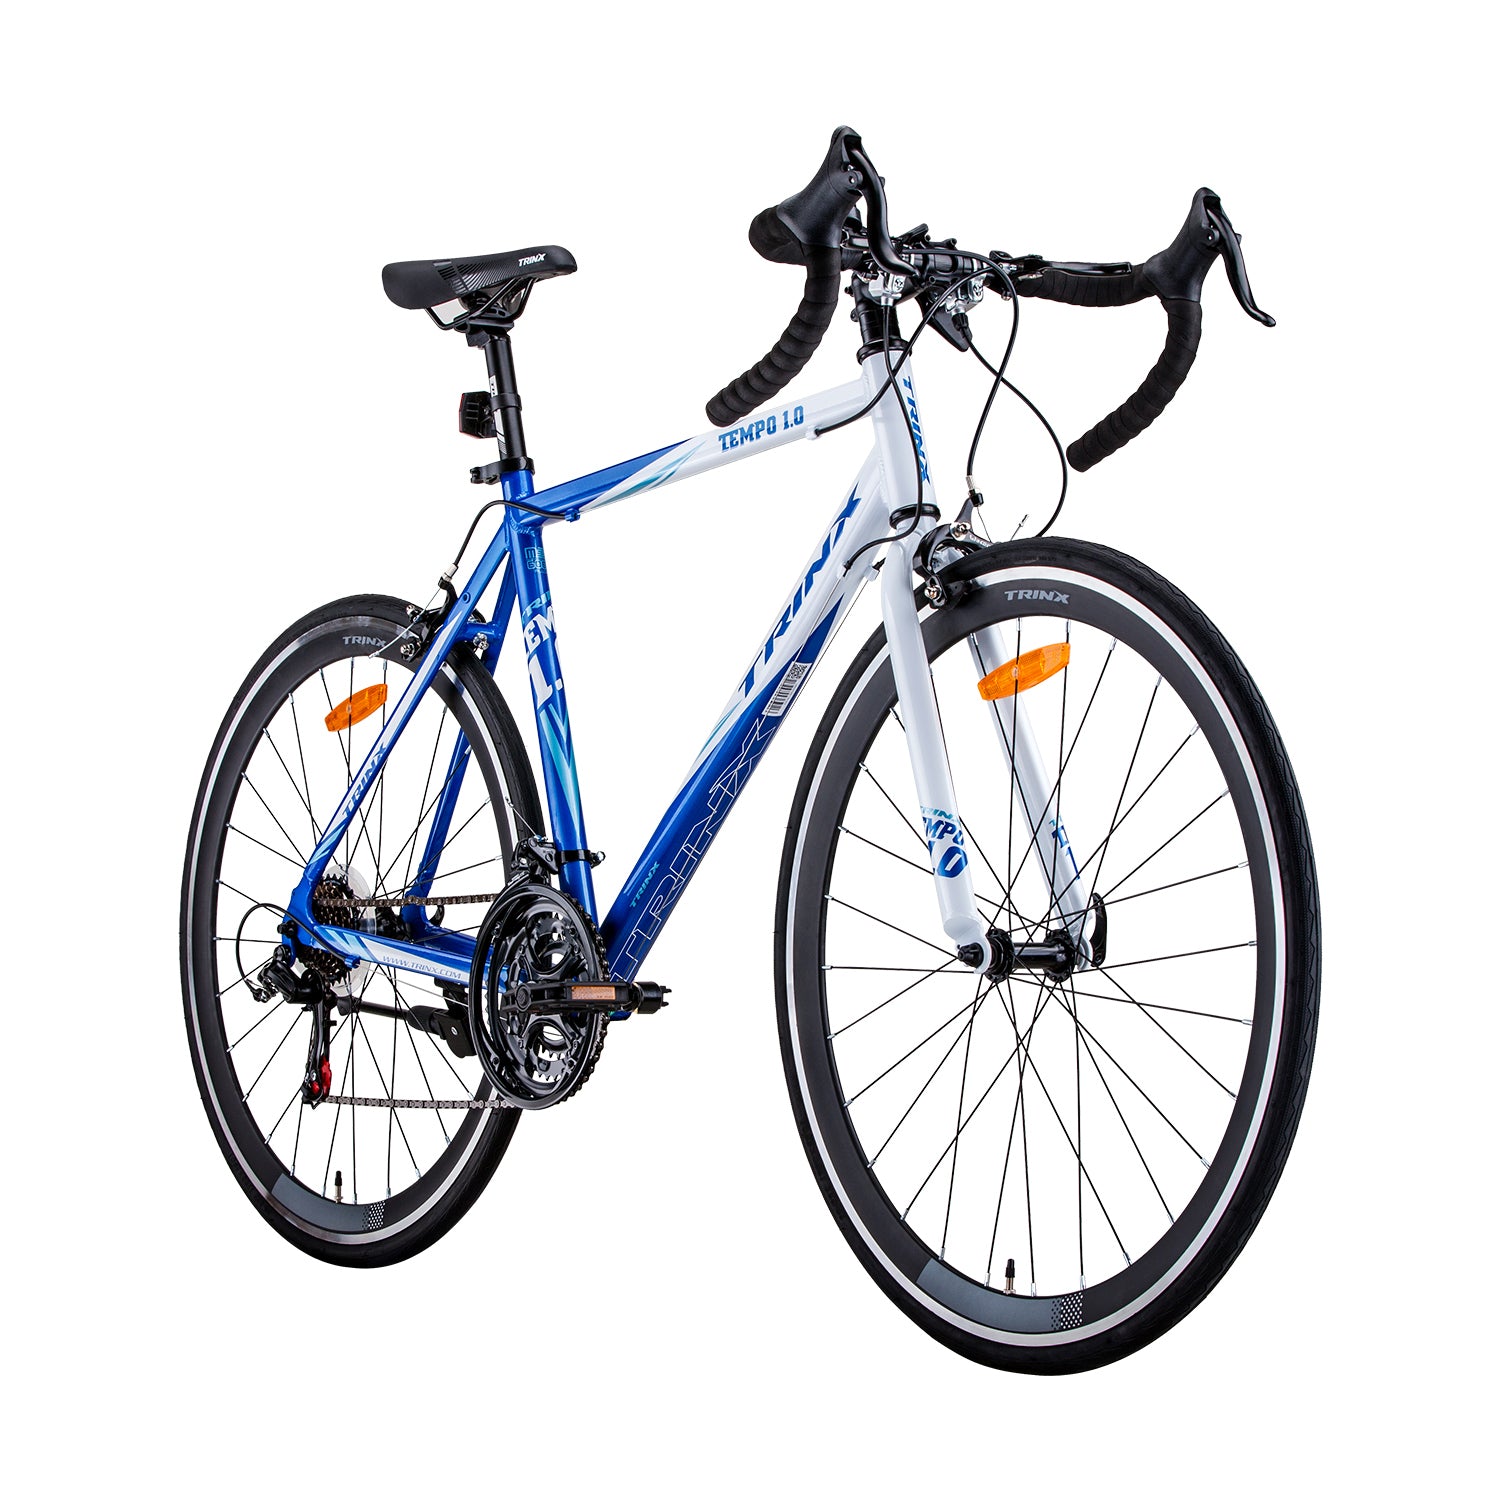 Trinx 700C Road Bike TEMPO1.0 Shimano 21 Speed Racing Bicycle 53cm Blue/White